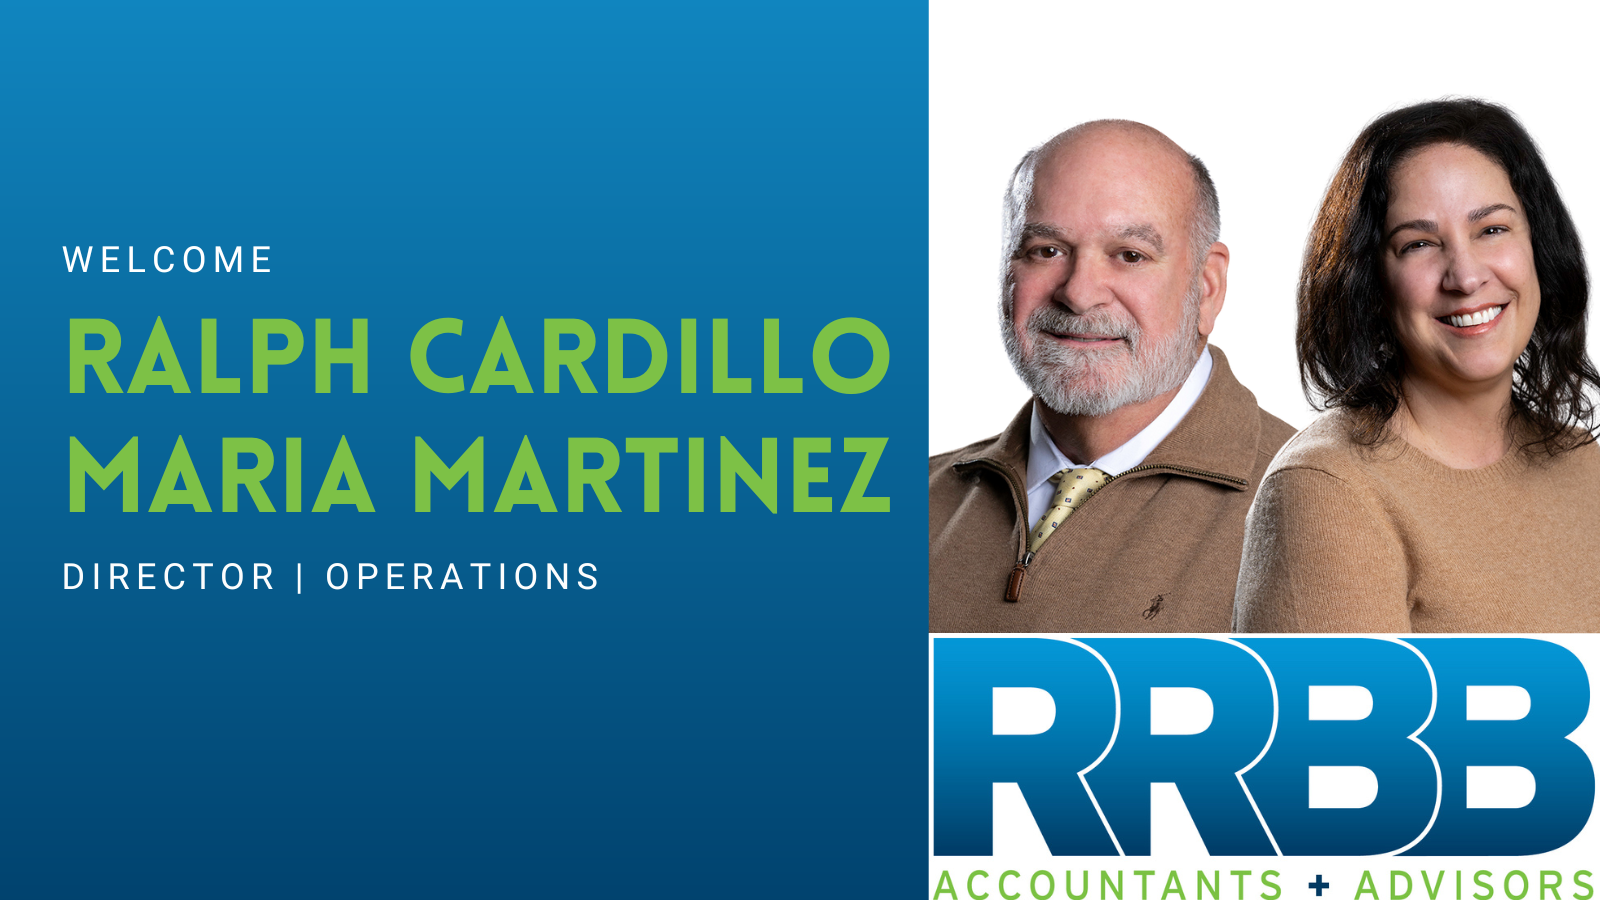 RRBB Advisors, LLC Welcomes Cardillo & Co. Image